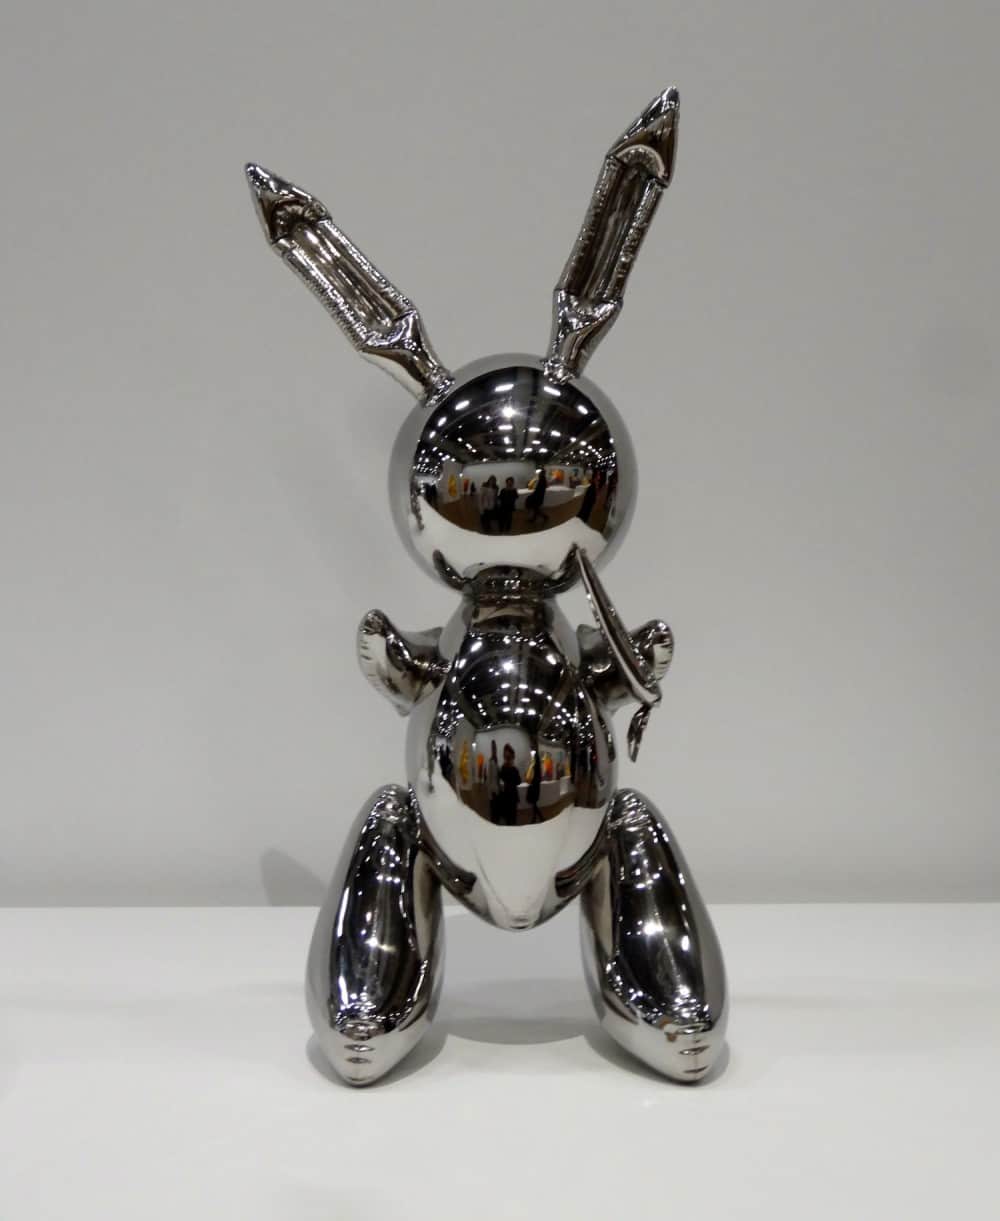 Jeff Koons' Rabbit